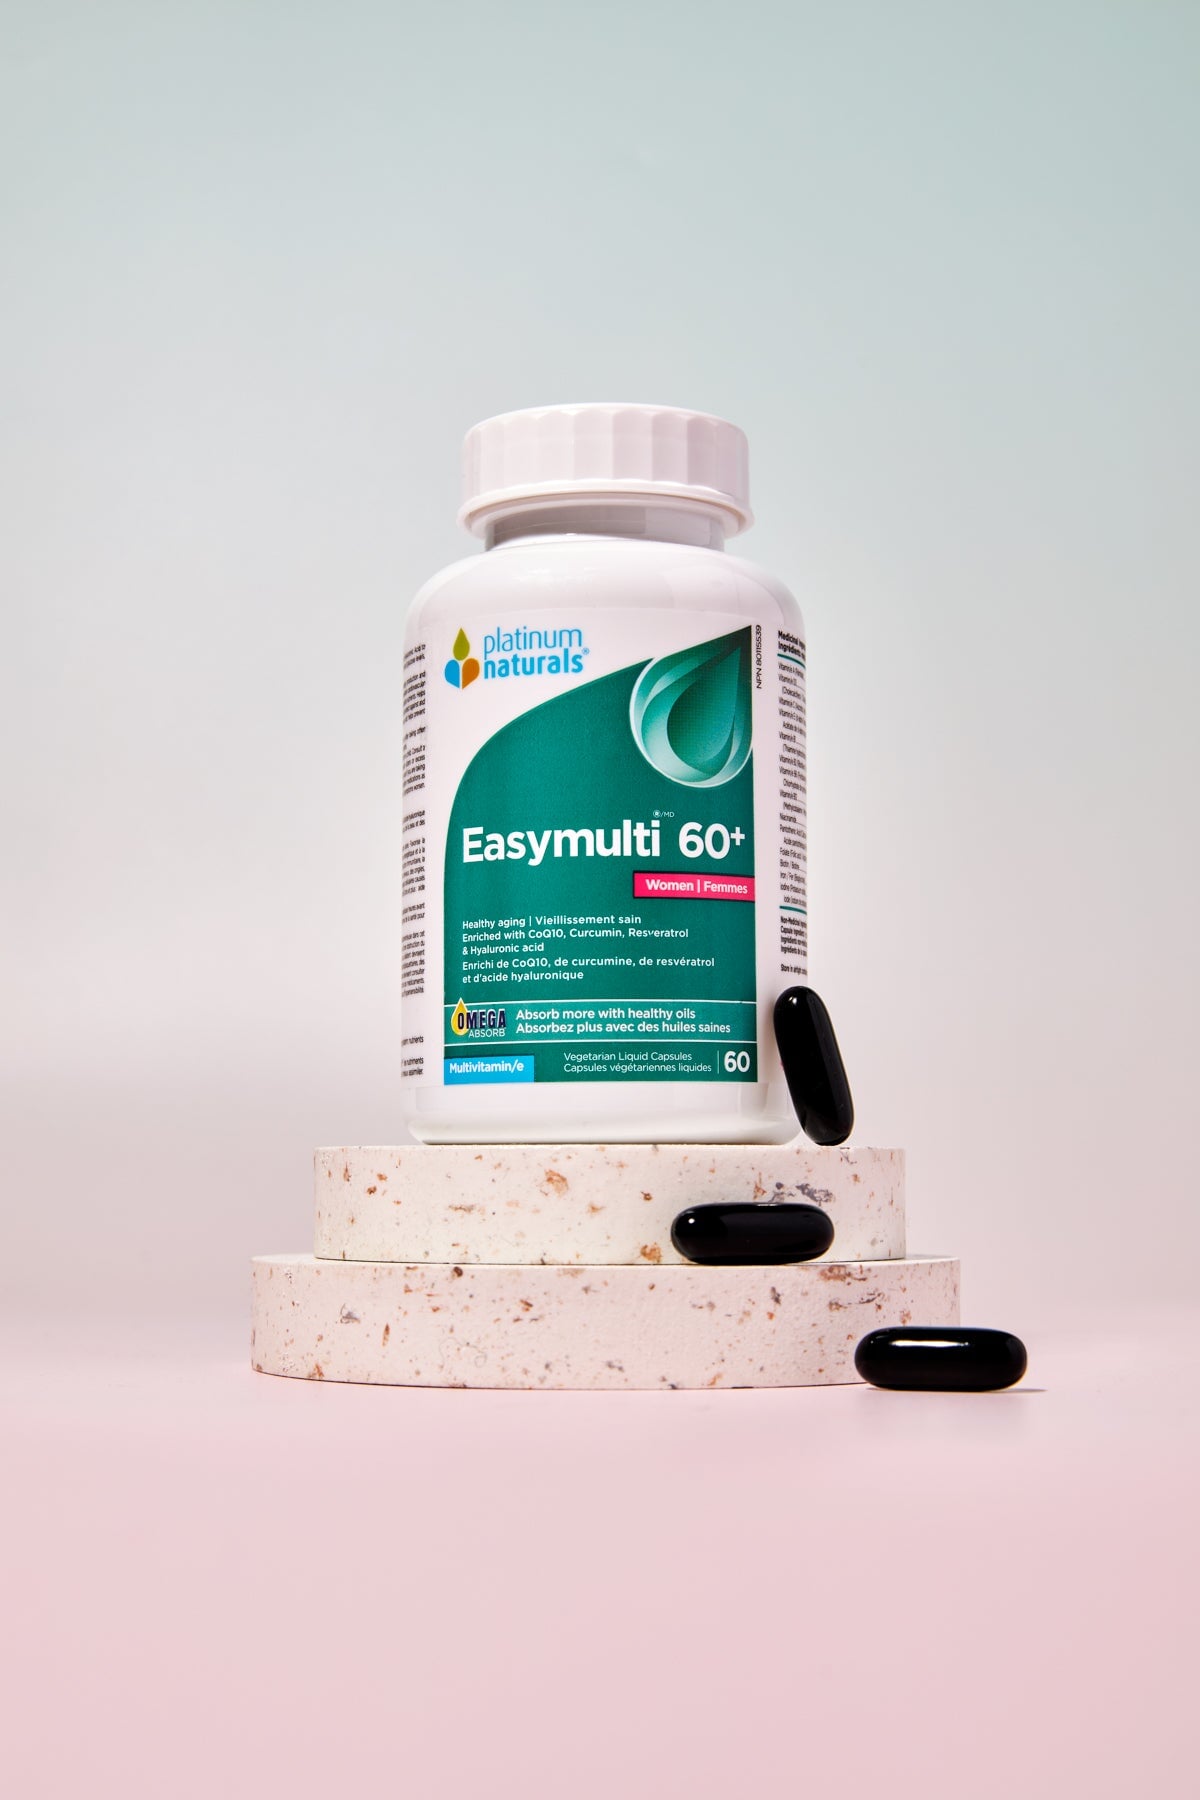 Easymulti 60+ for Women Multivitamin cg-dev-platinumnaturals 